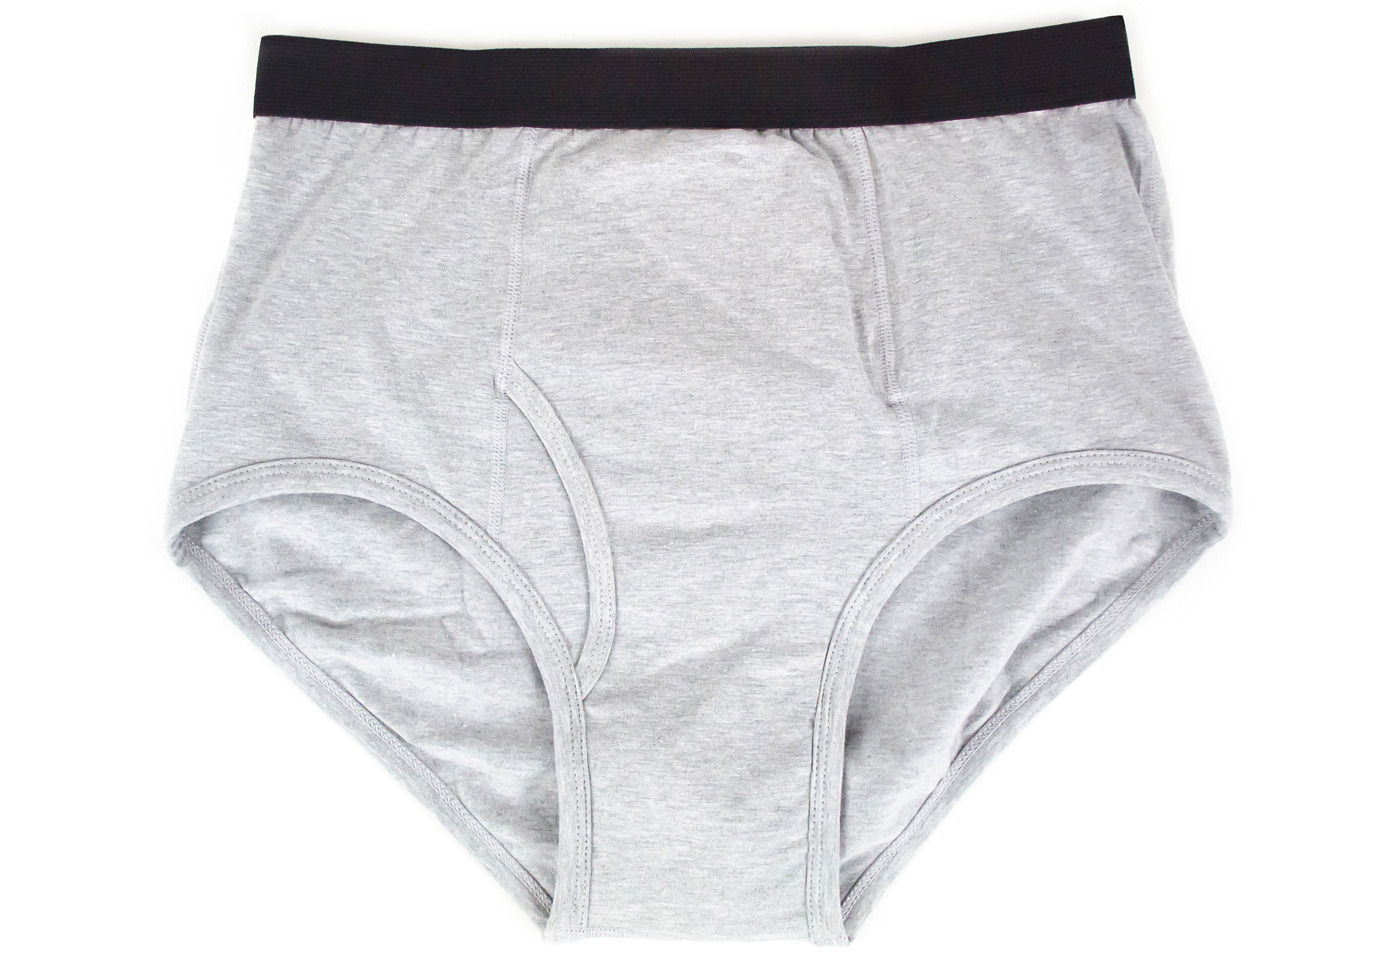 Ileostomy Bags  Options Undergarments Men's Basic Brief Undergarment